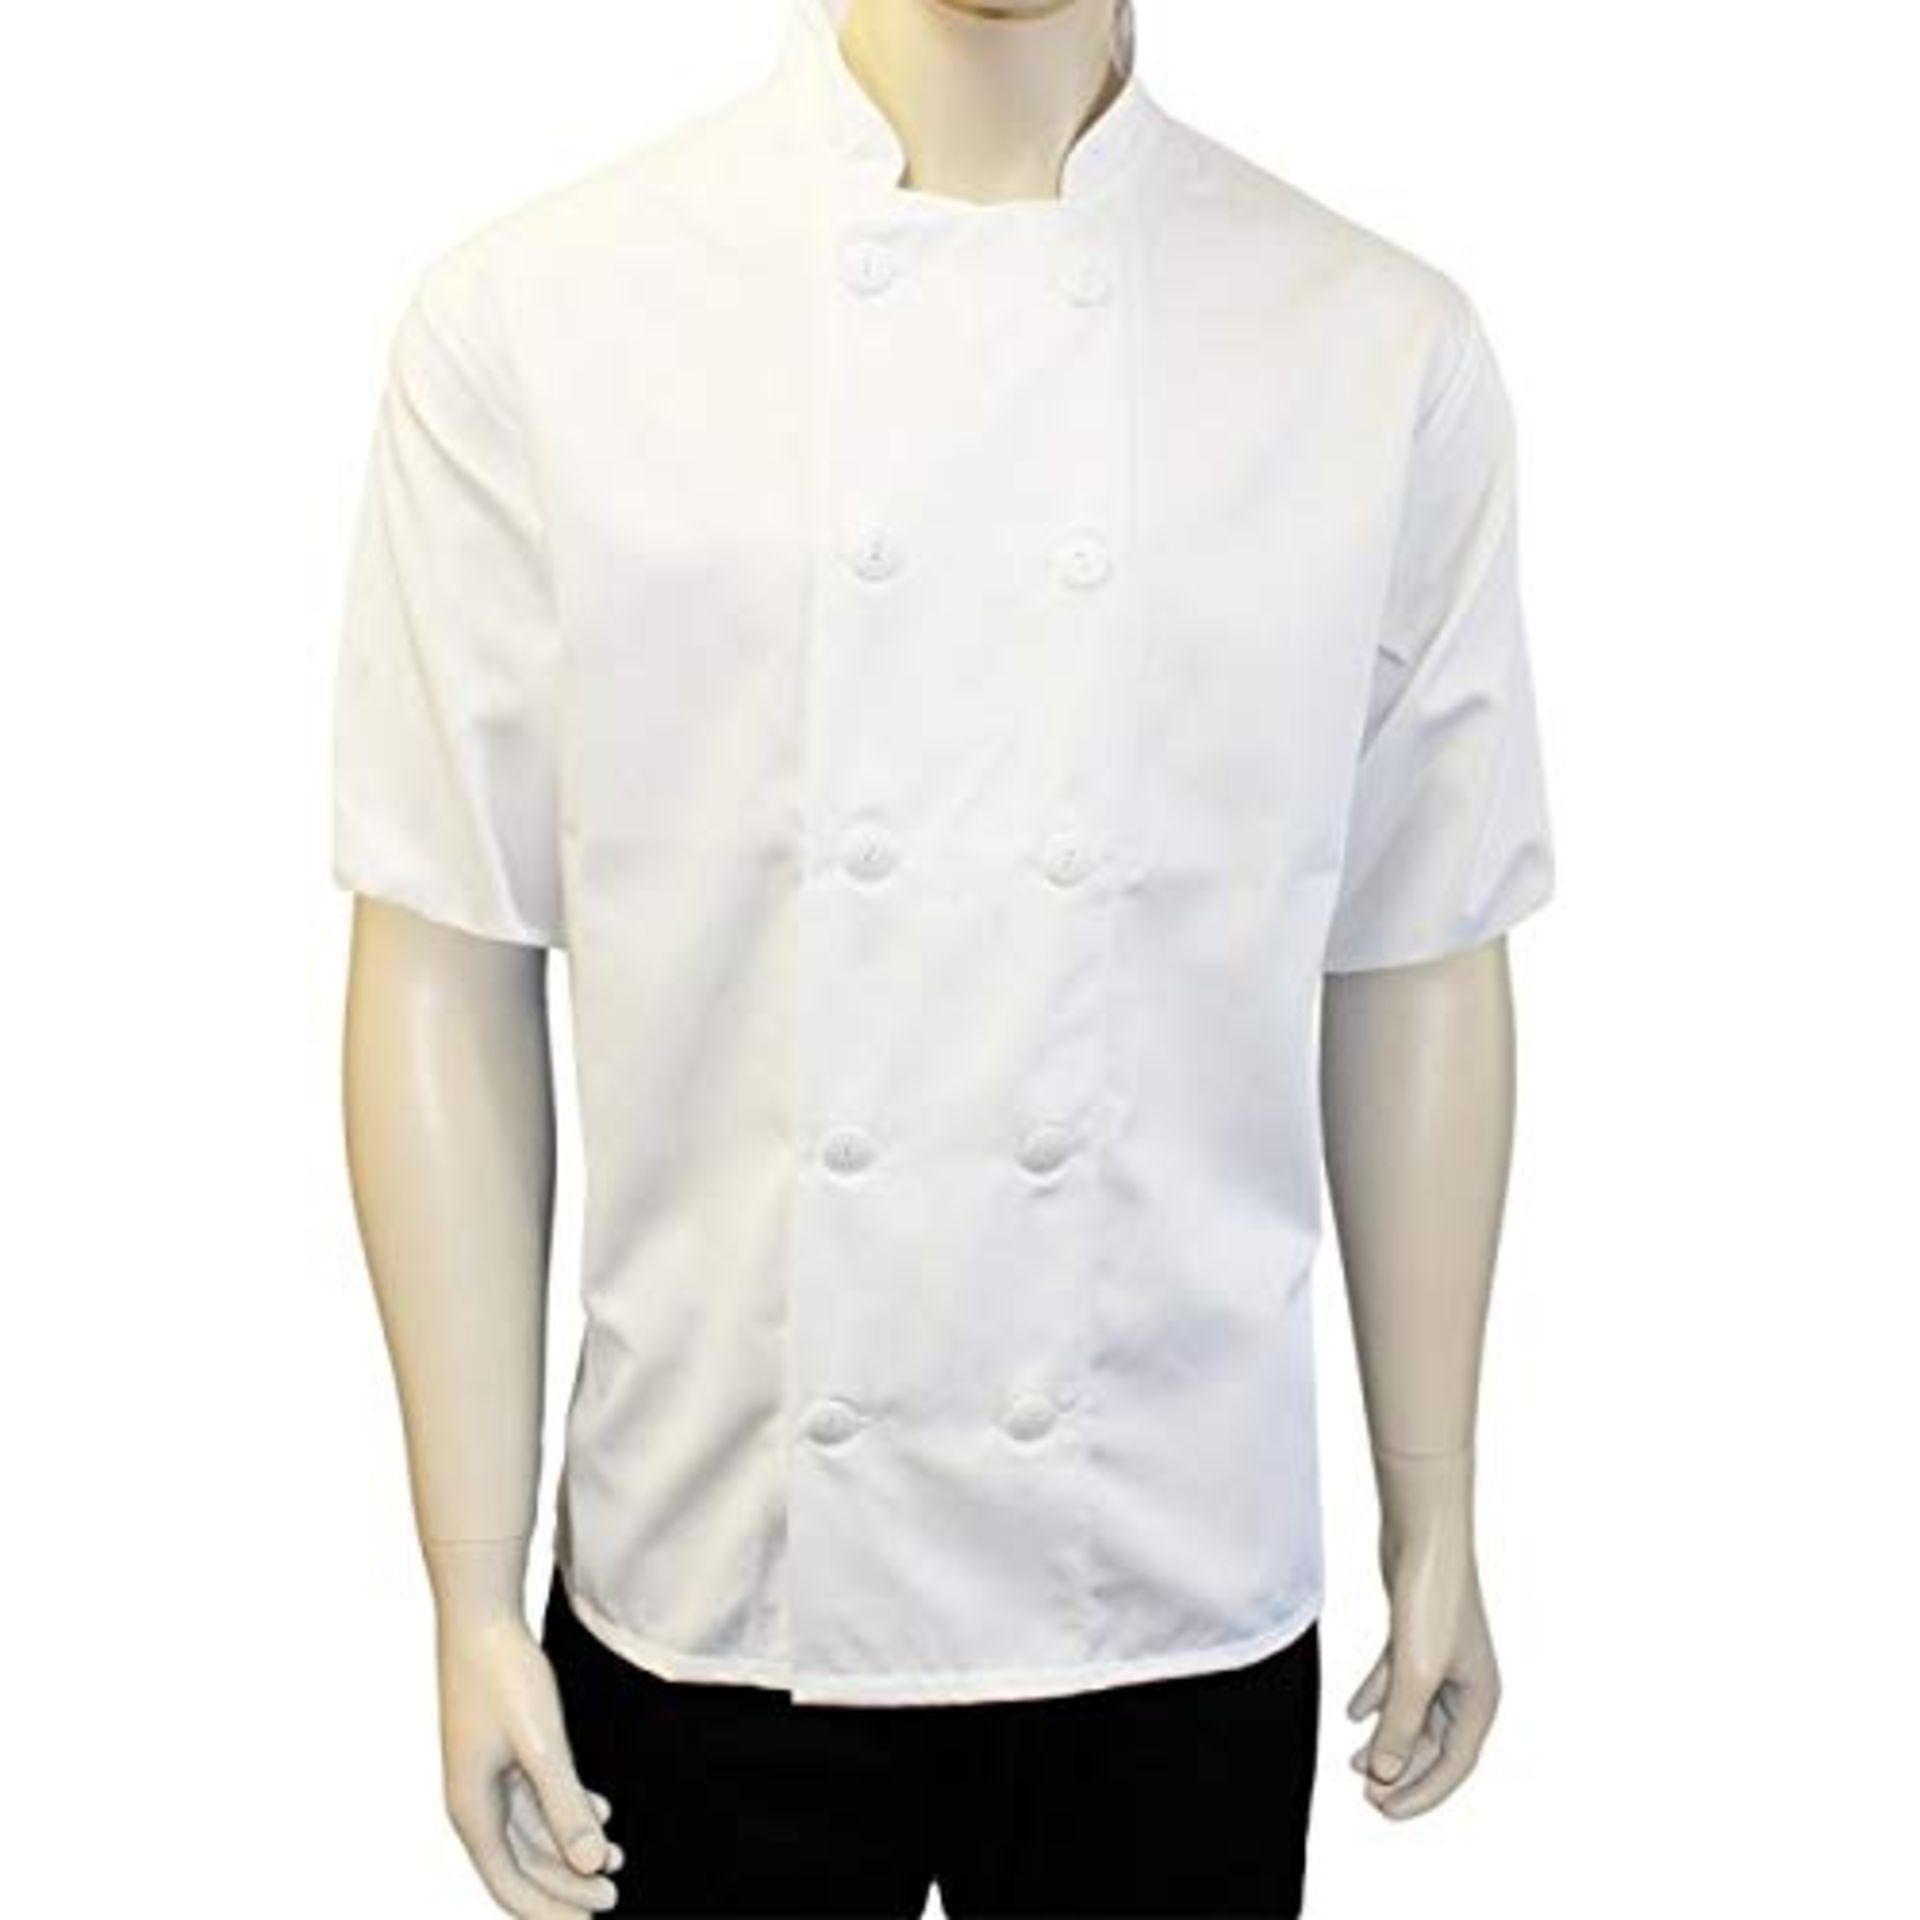 V Grade A Two Fairline Chefs' Jackets size XL, front pocket - unisex - short sleeved